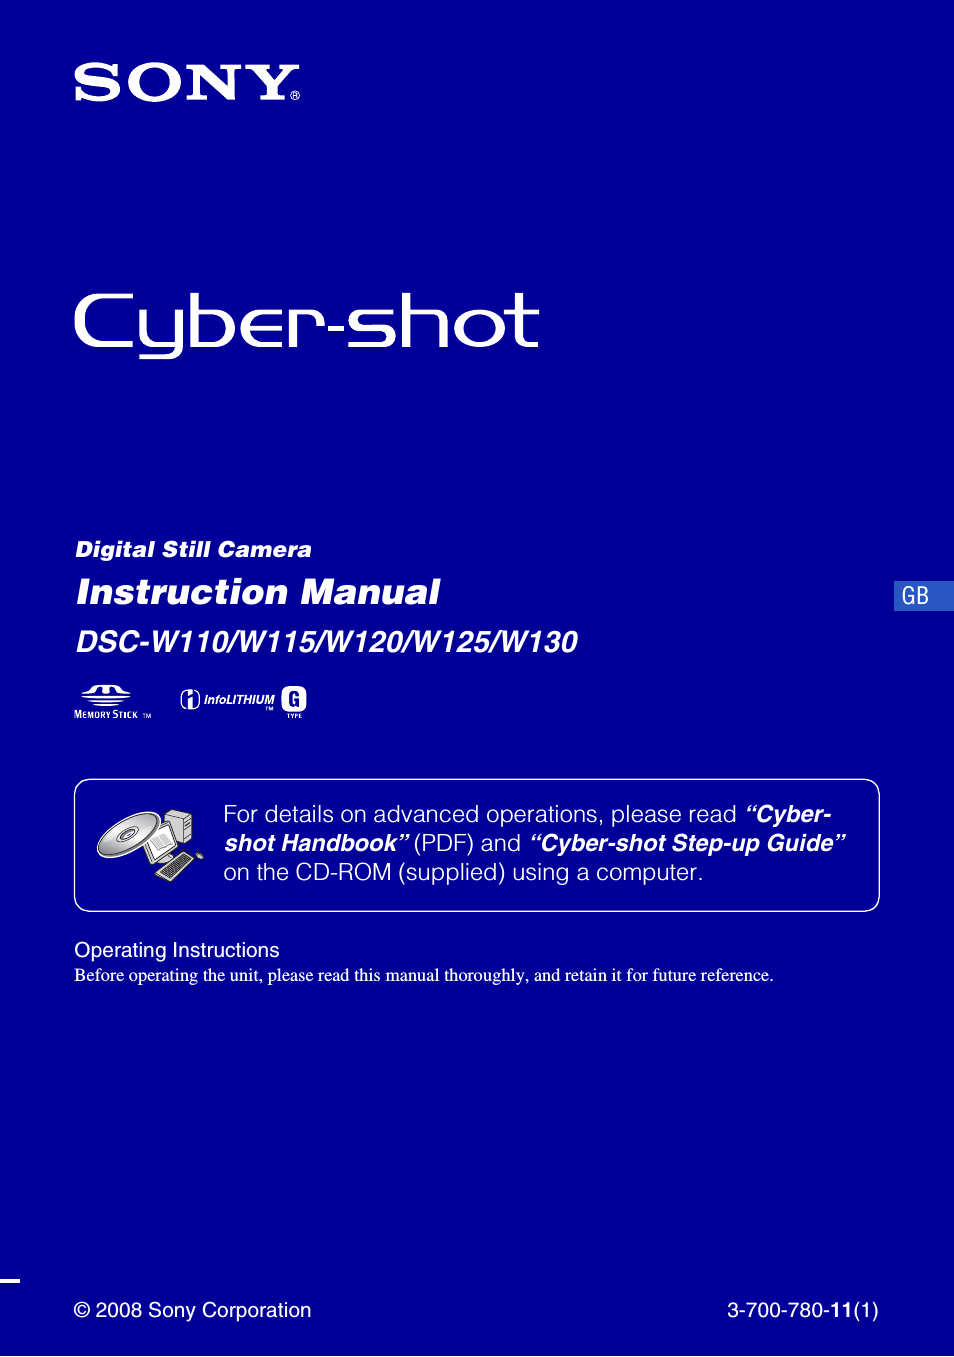 Cyber-shot W120 (Page 1)